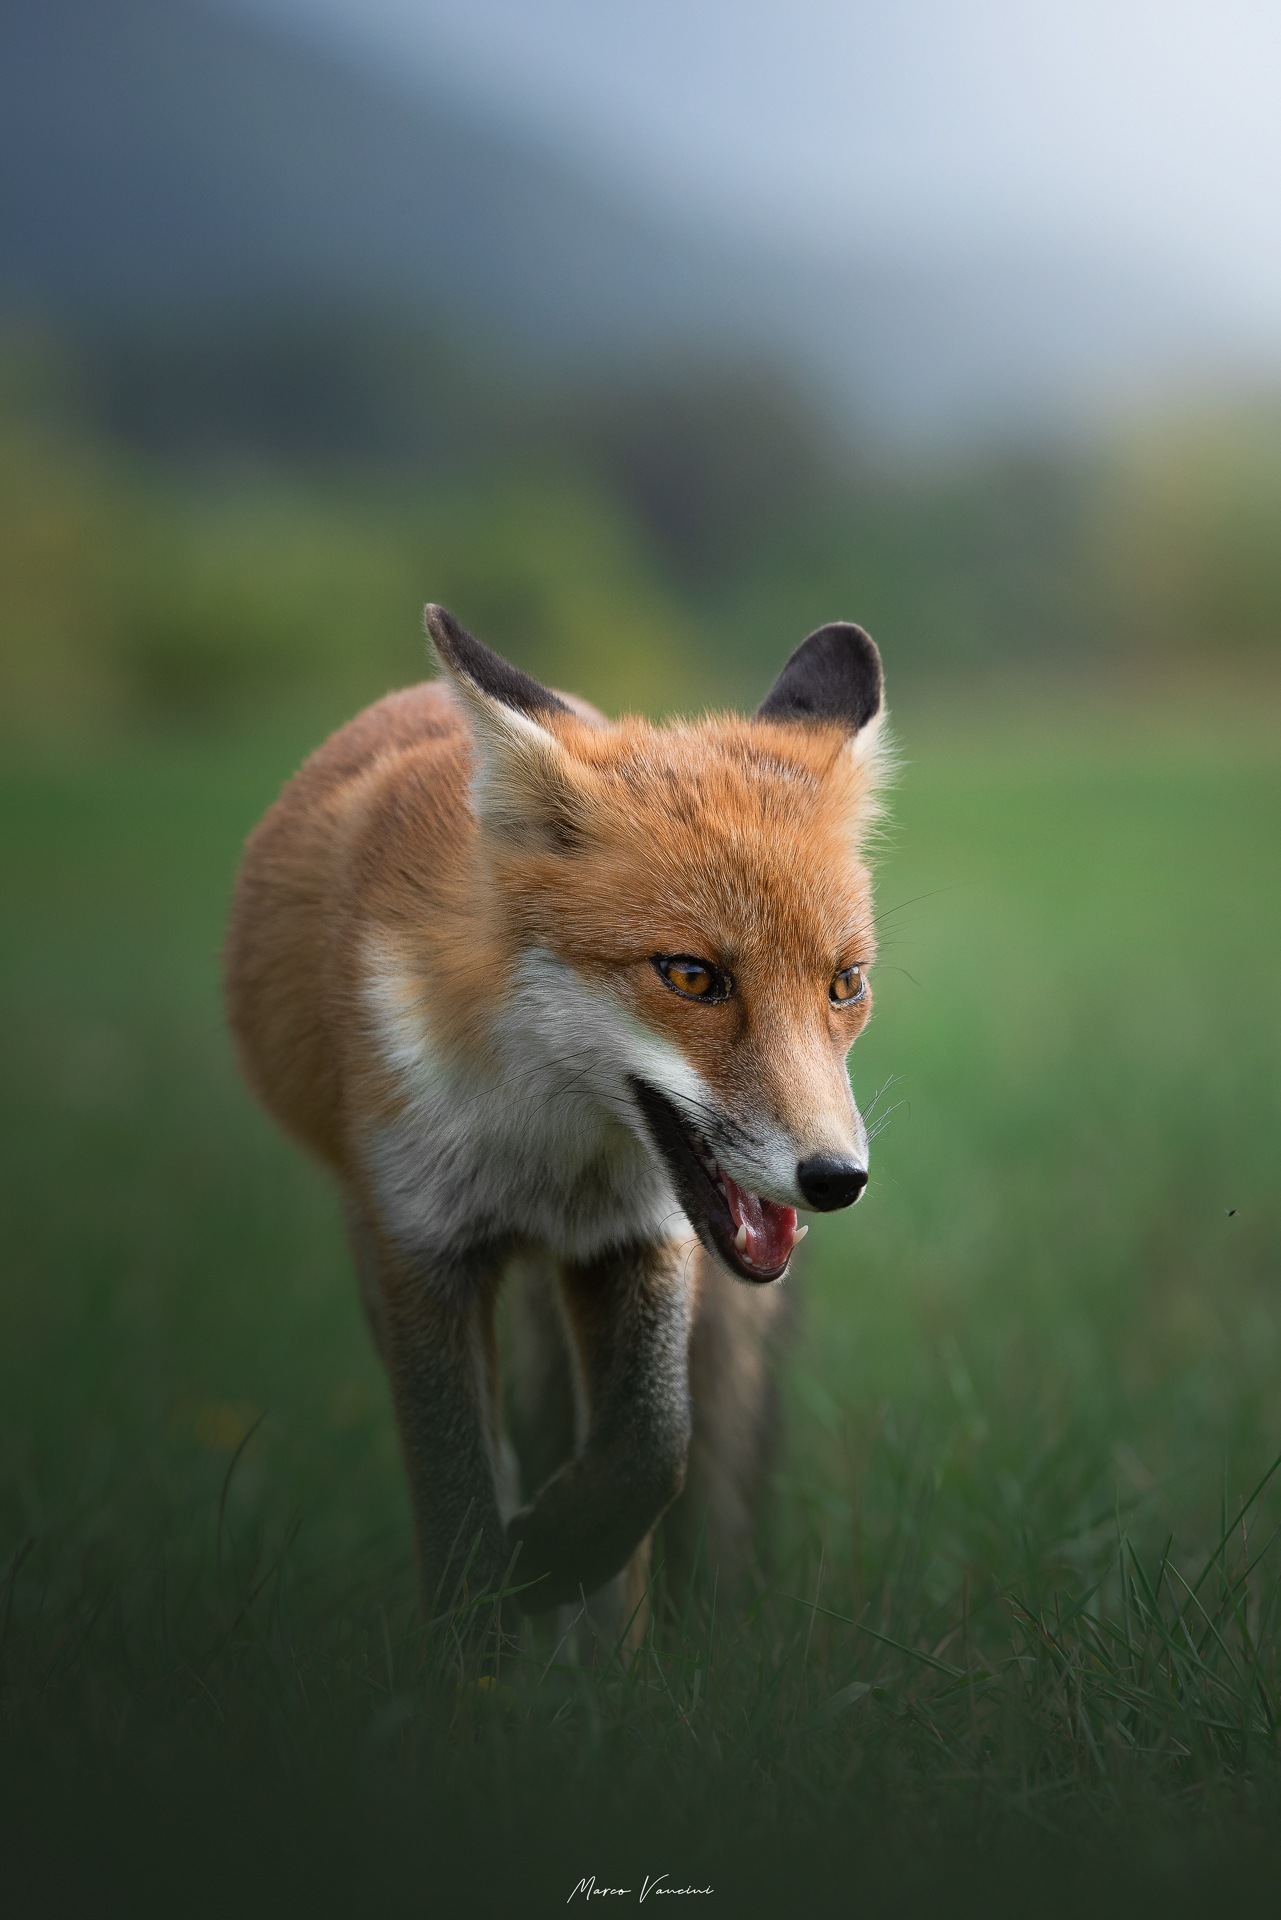 Splendid fox...